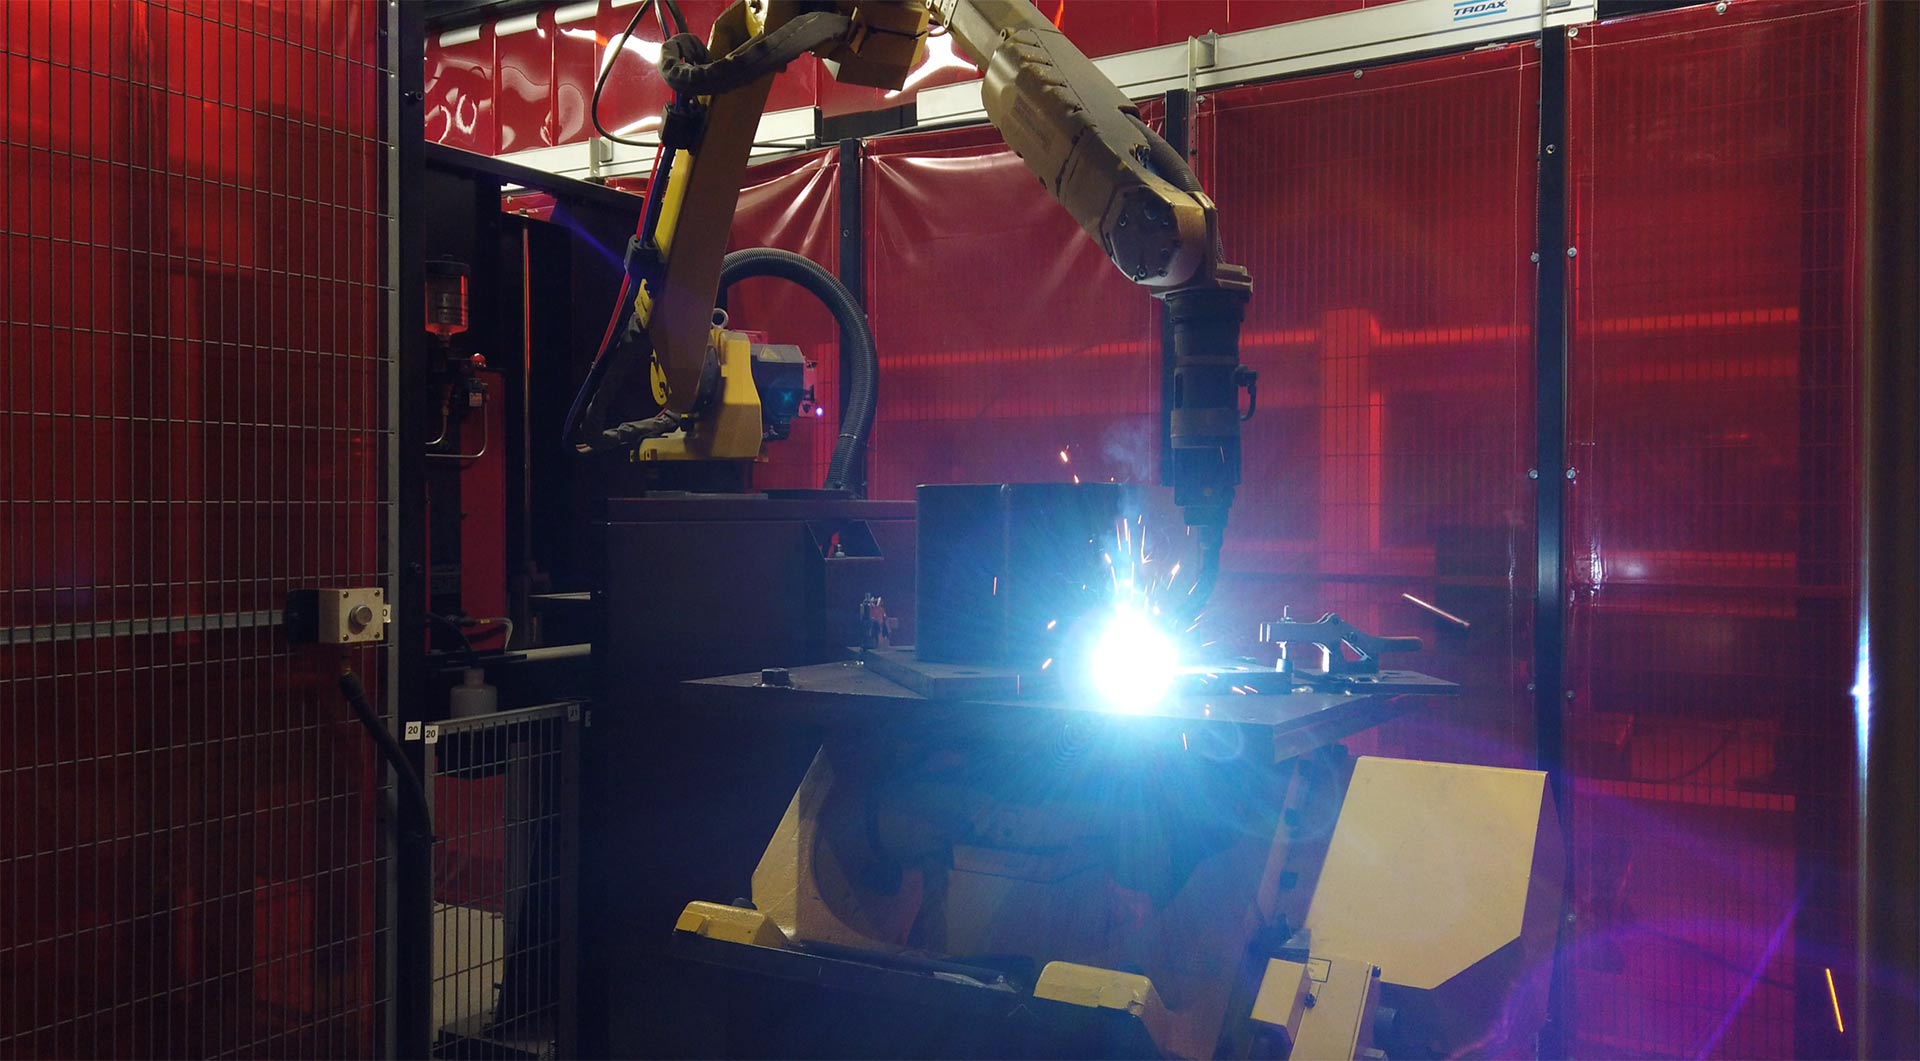 Robot welding station